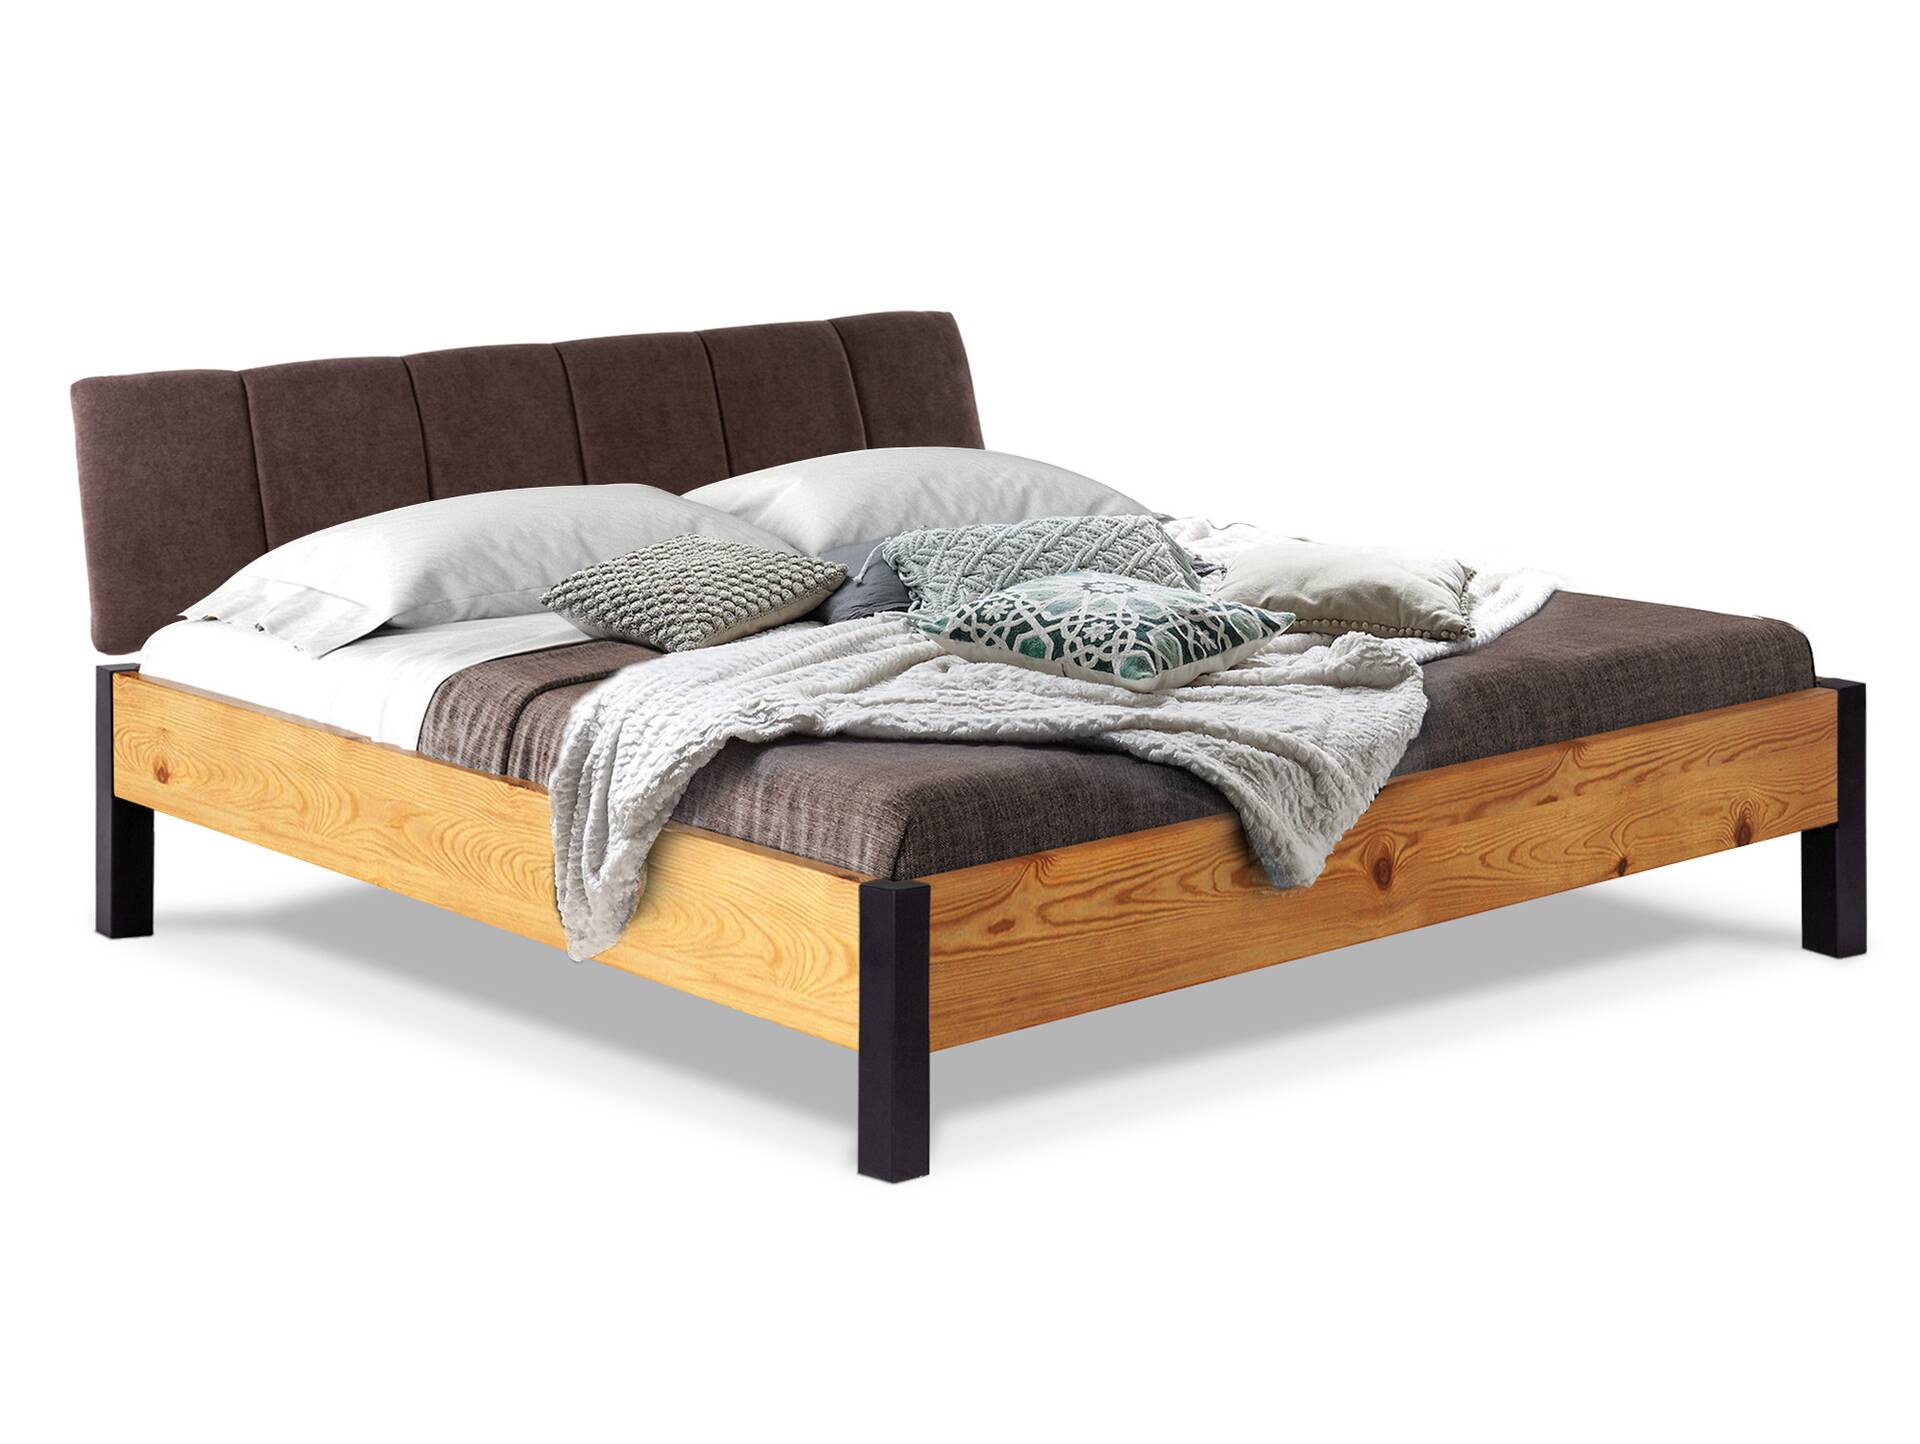 CURBY Bett Metallfuß, mit Polsterkopfteil, Material Massivholz, rustikale Altholzoptik, Fichte 120 x 200 cm | natur | Stoff Braun mit Steppung